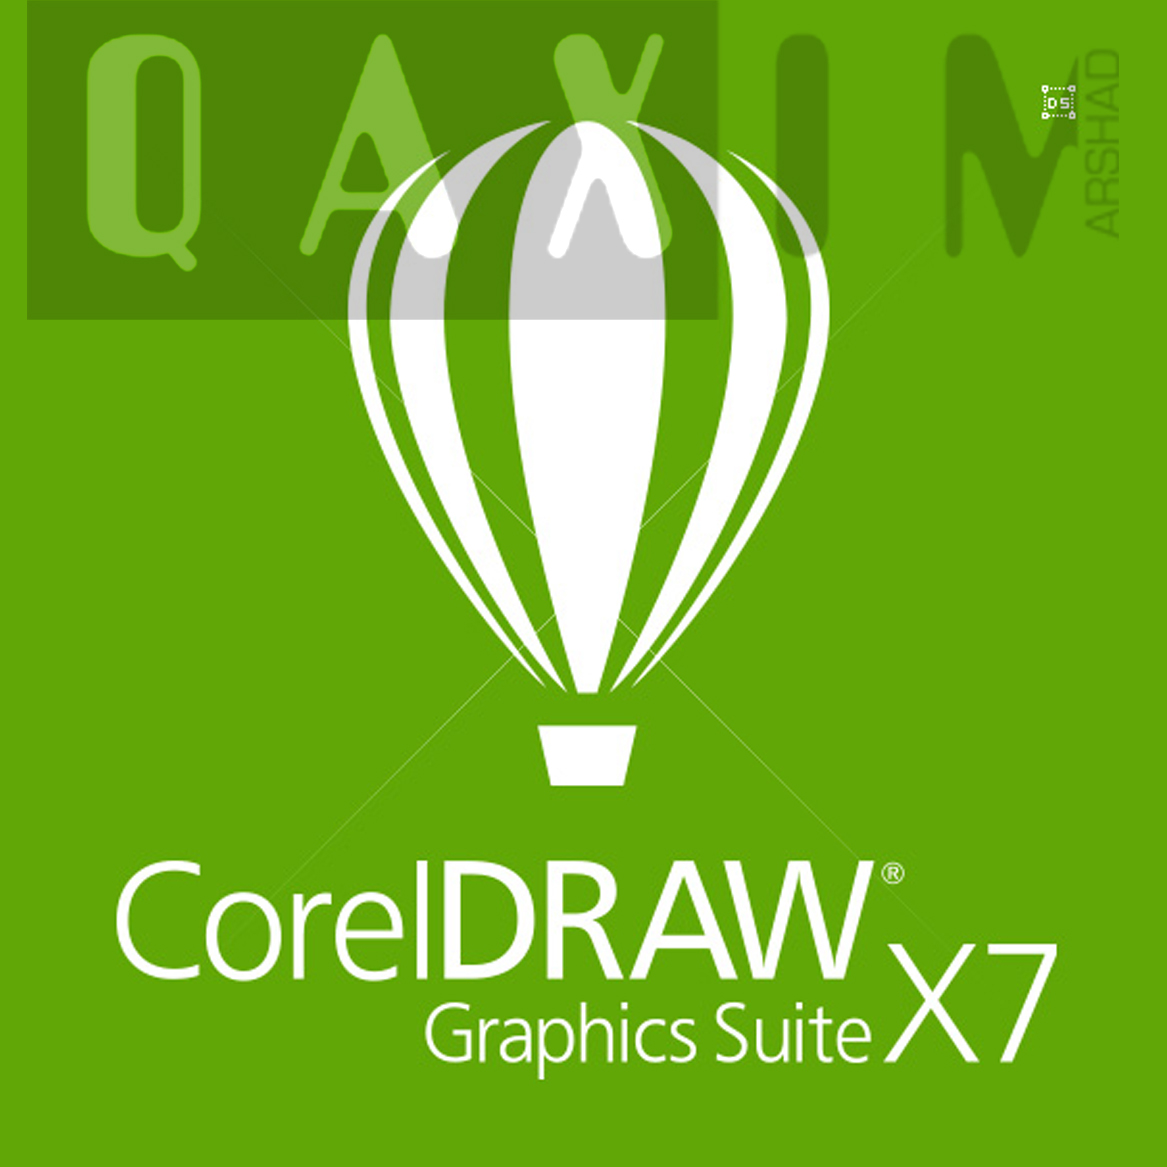 Coral draw x7 keygen 64 bit download